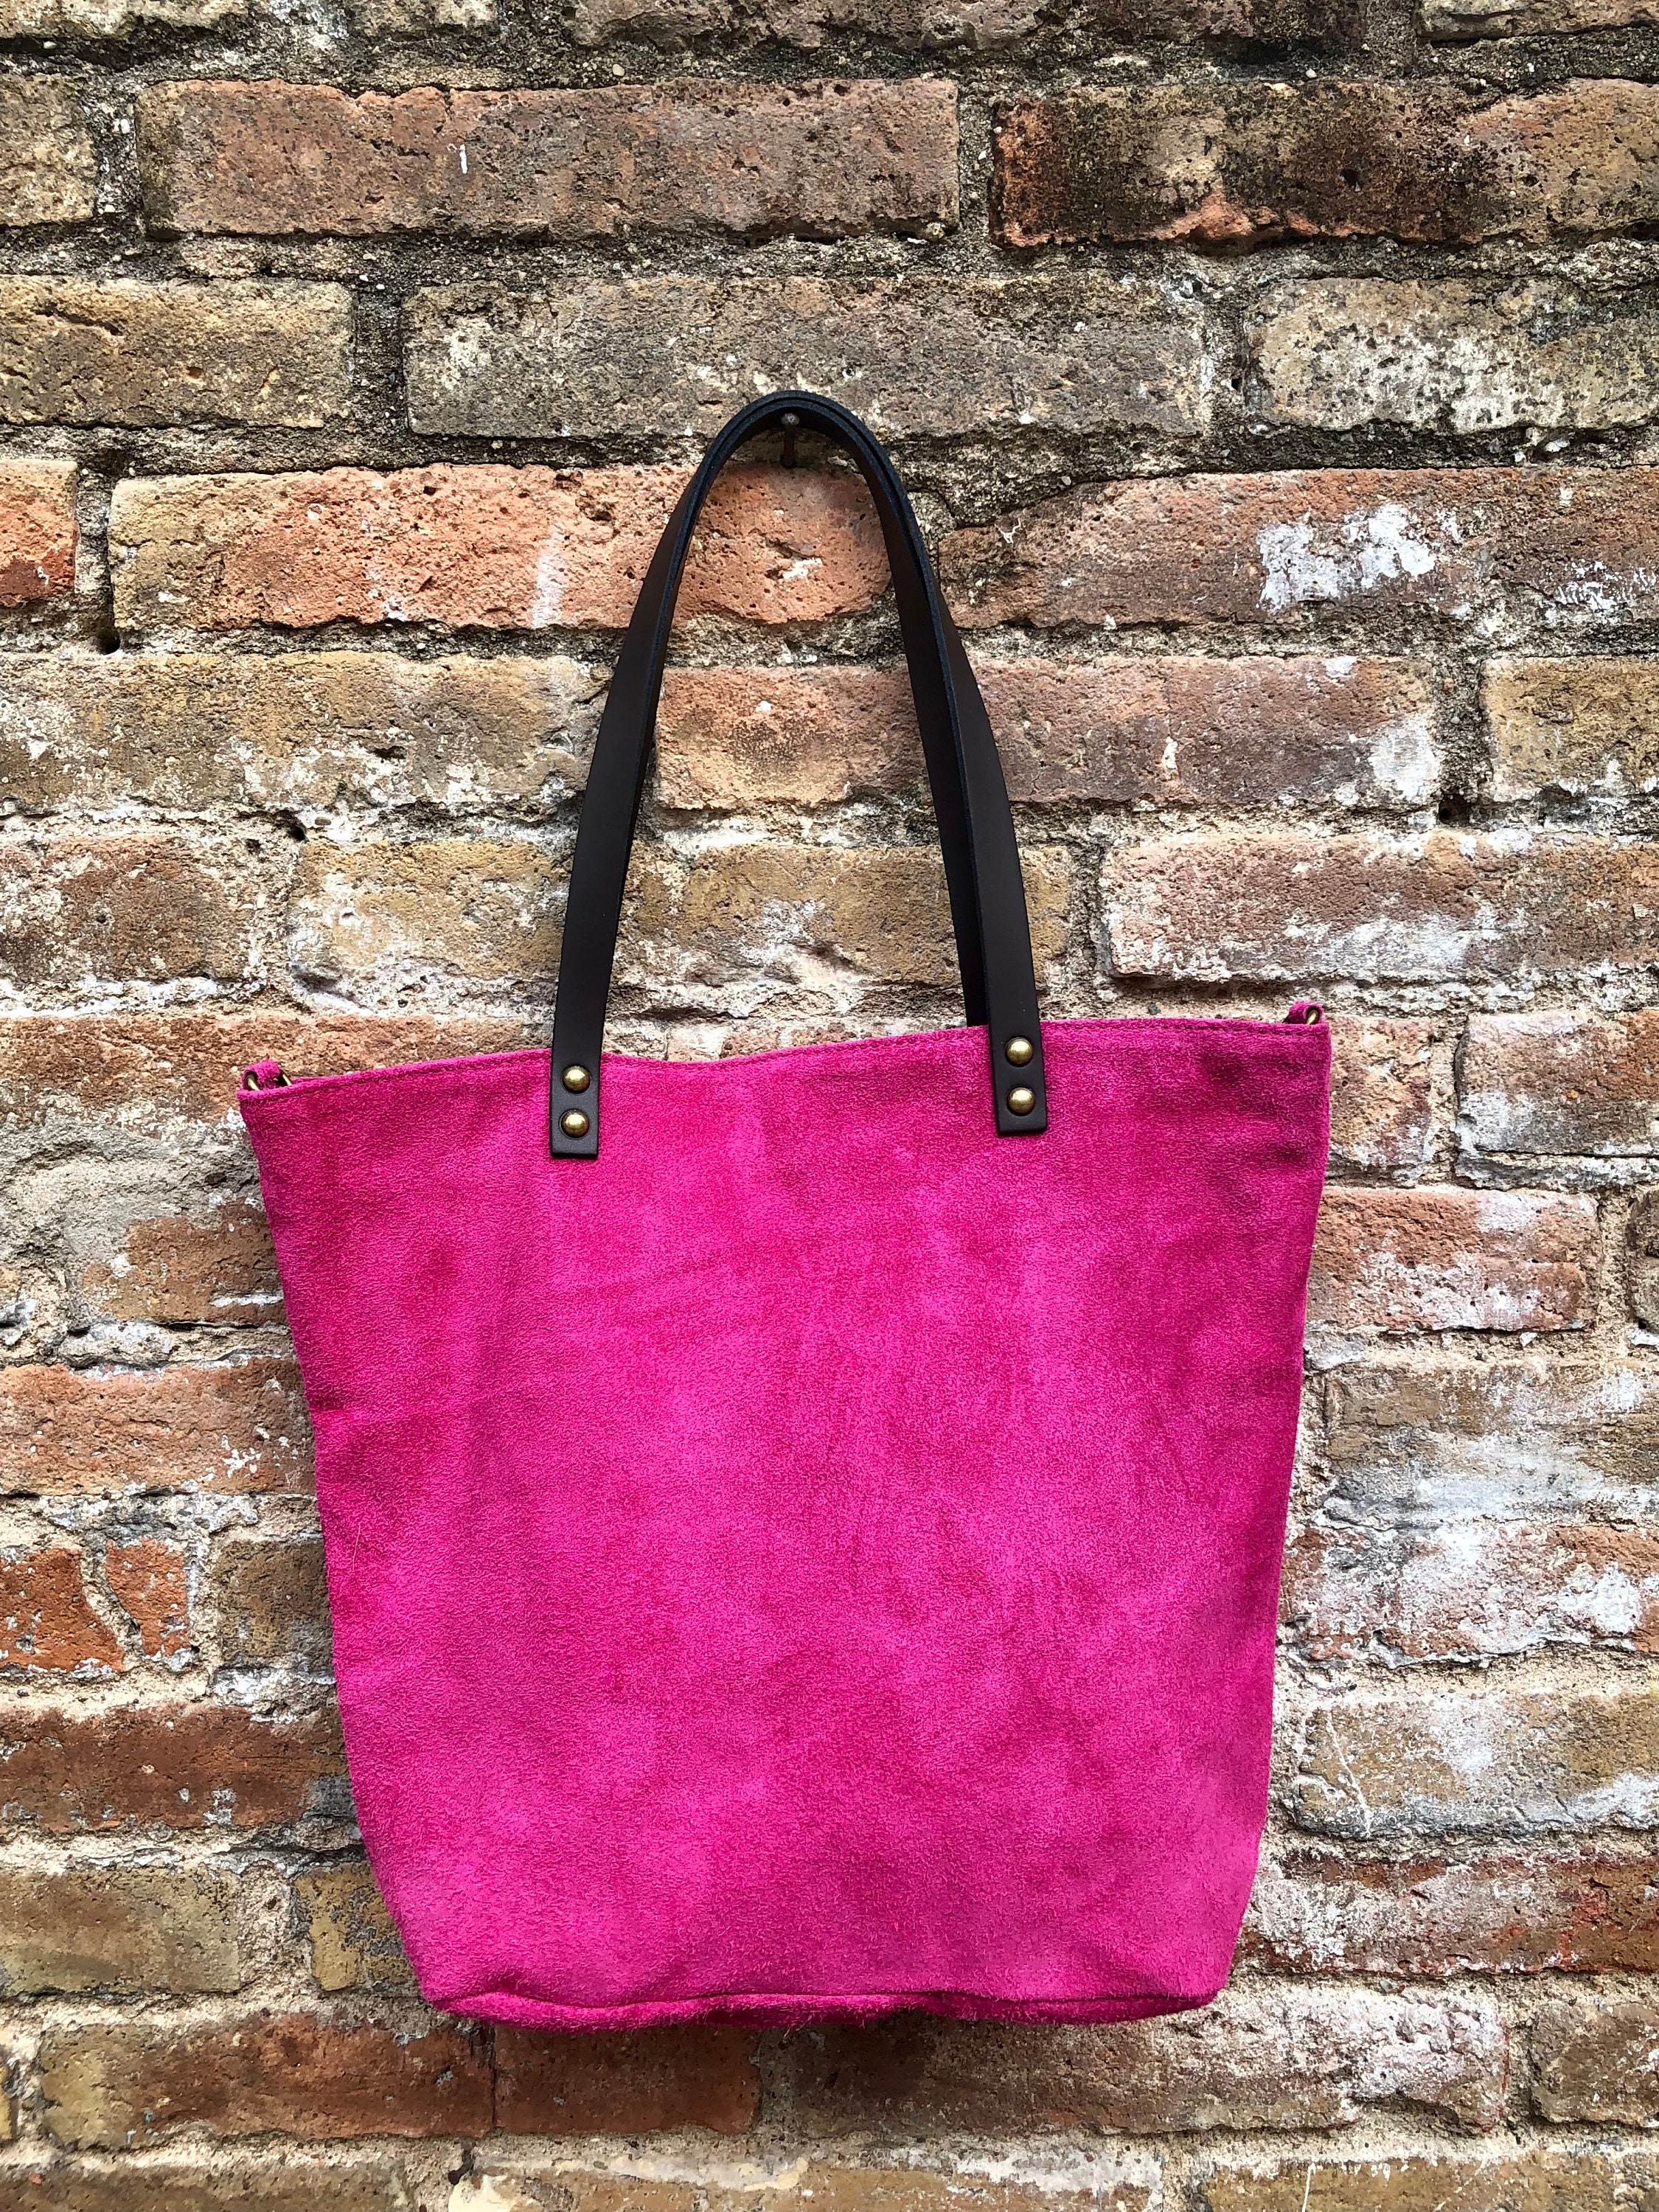 Tote Leather Bag in Fuchsia Pink. GENUINE Metallic Leather 